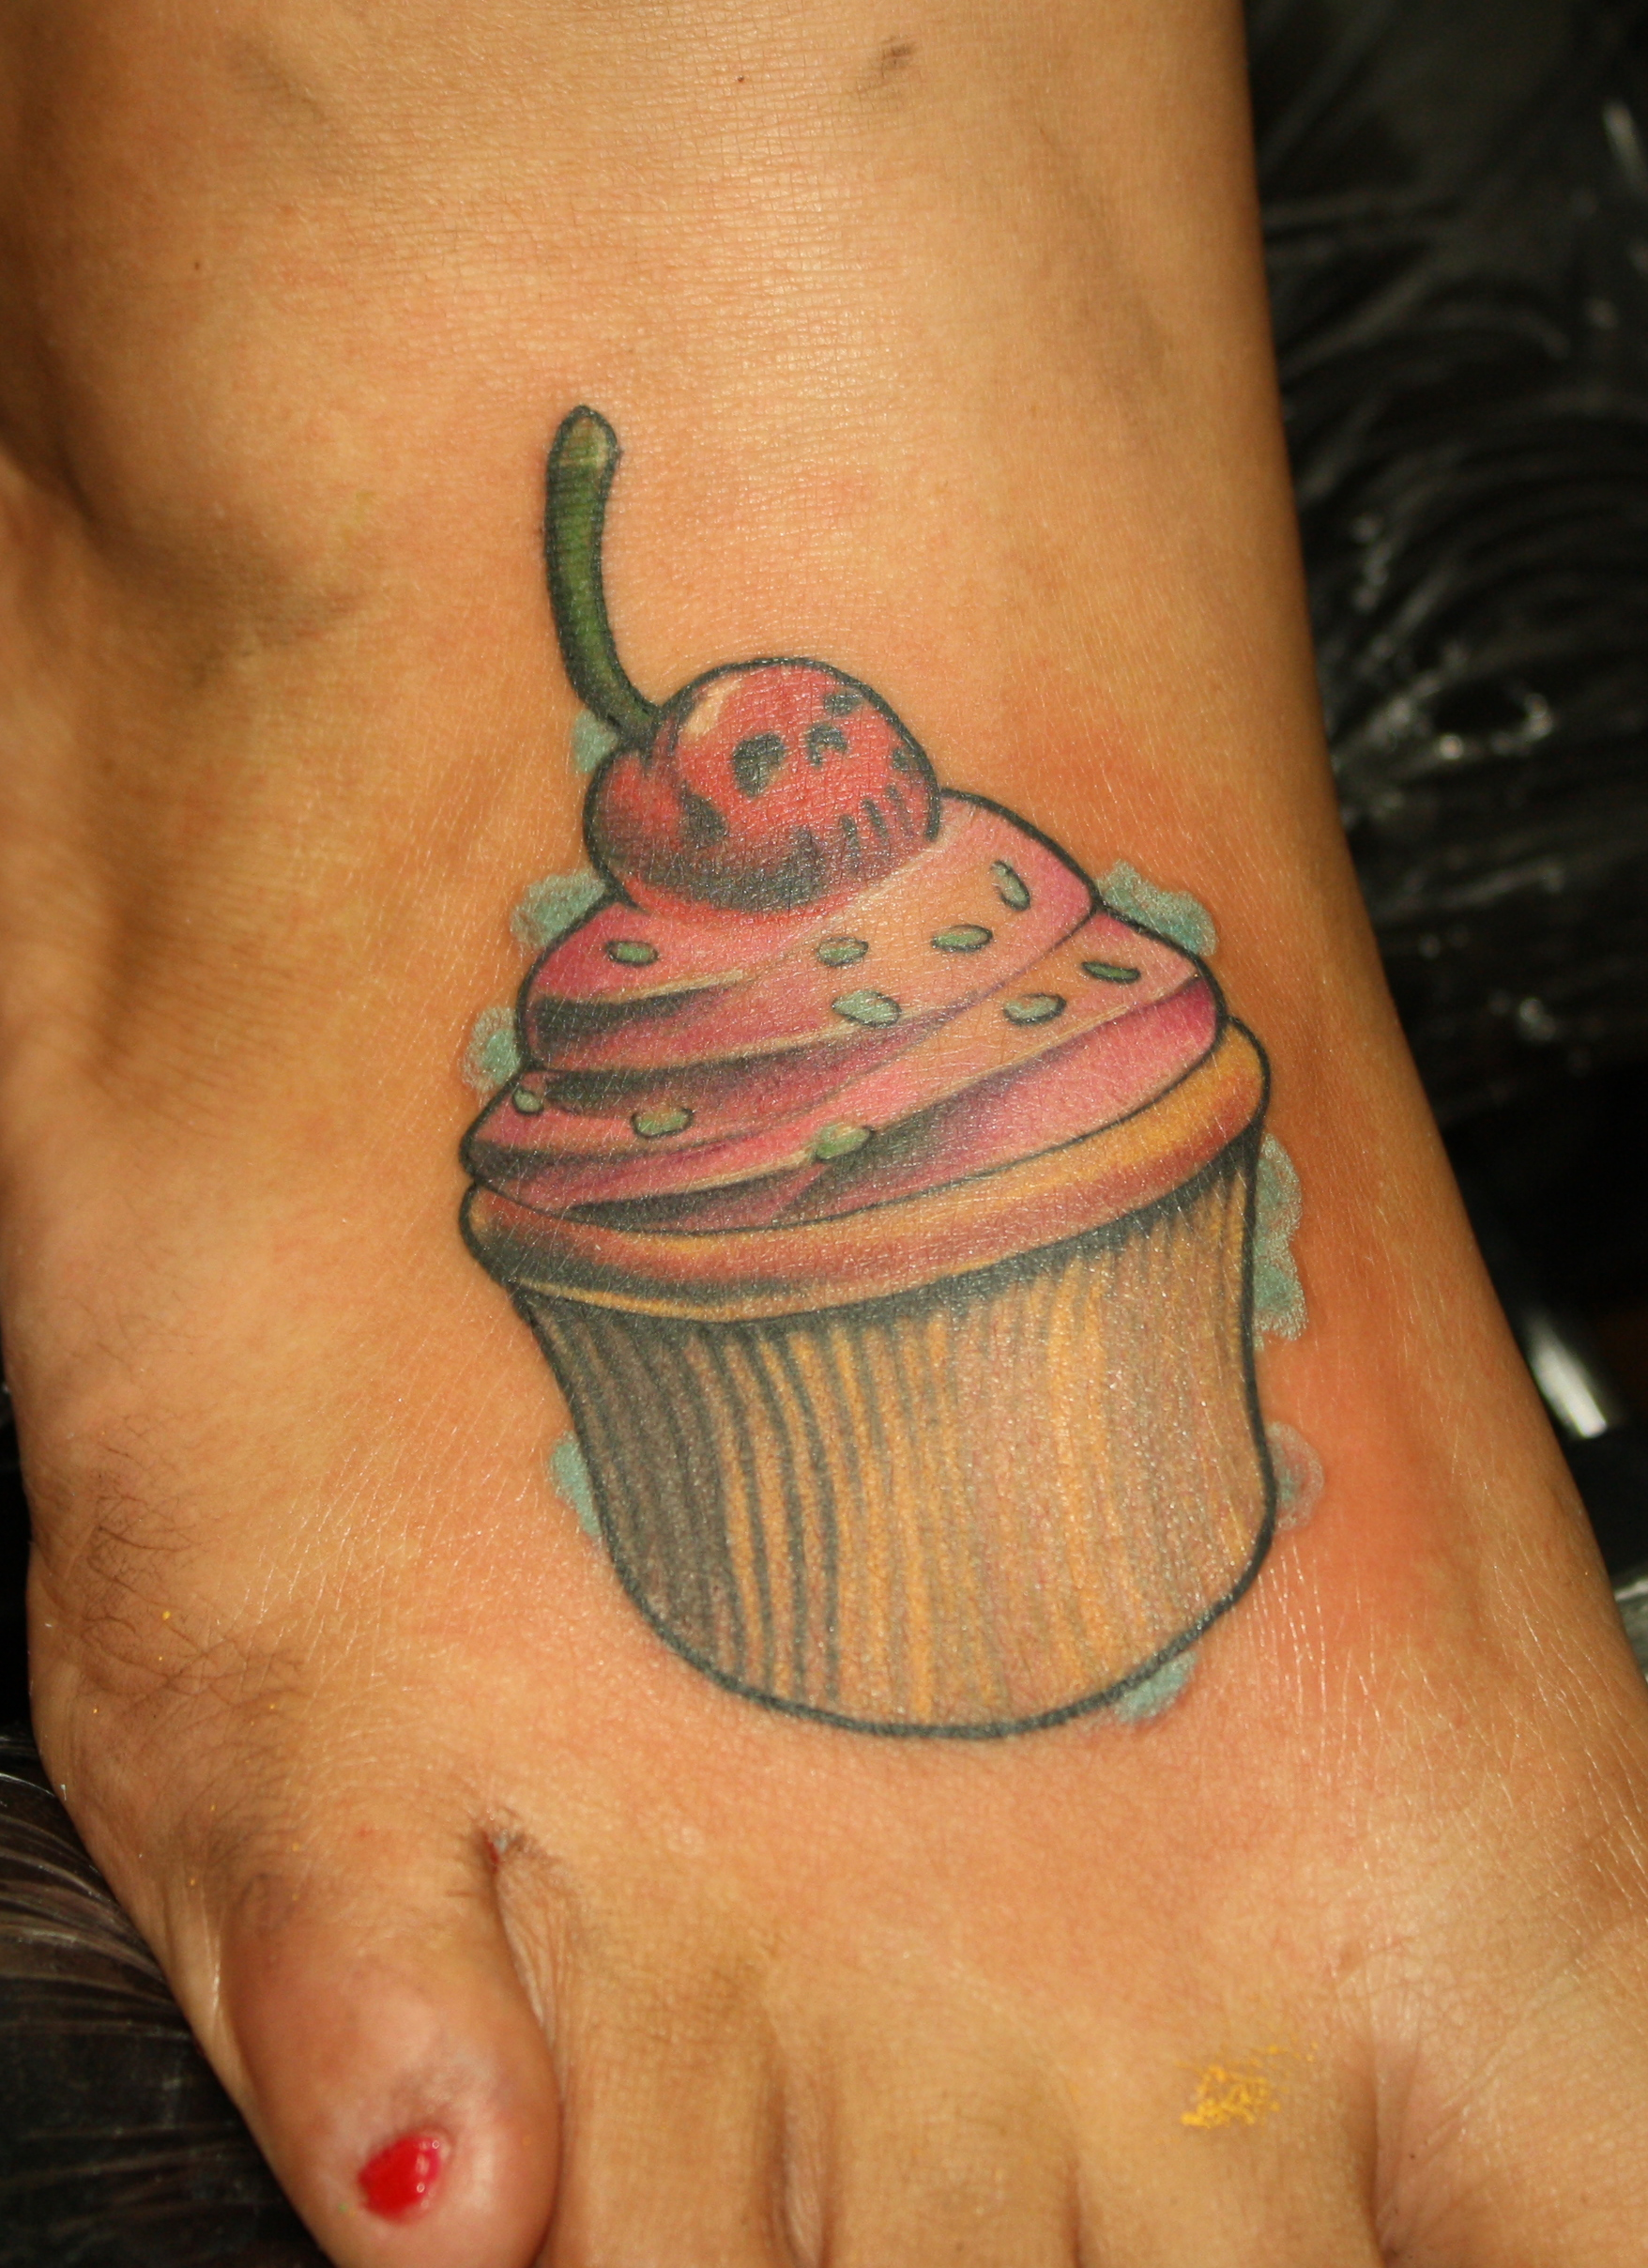 cupcake tattoo designs.